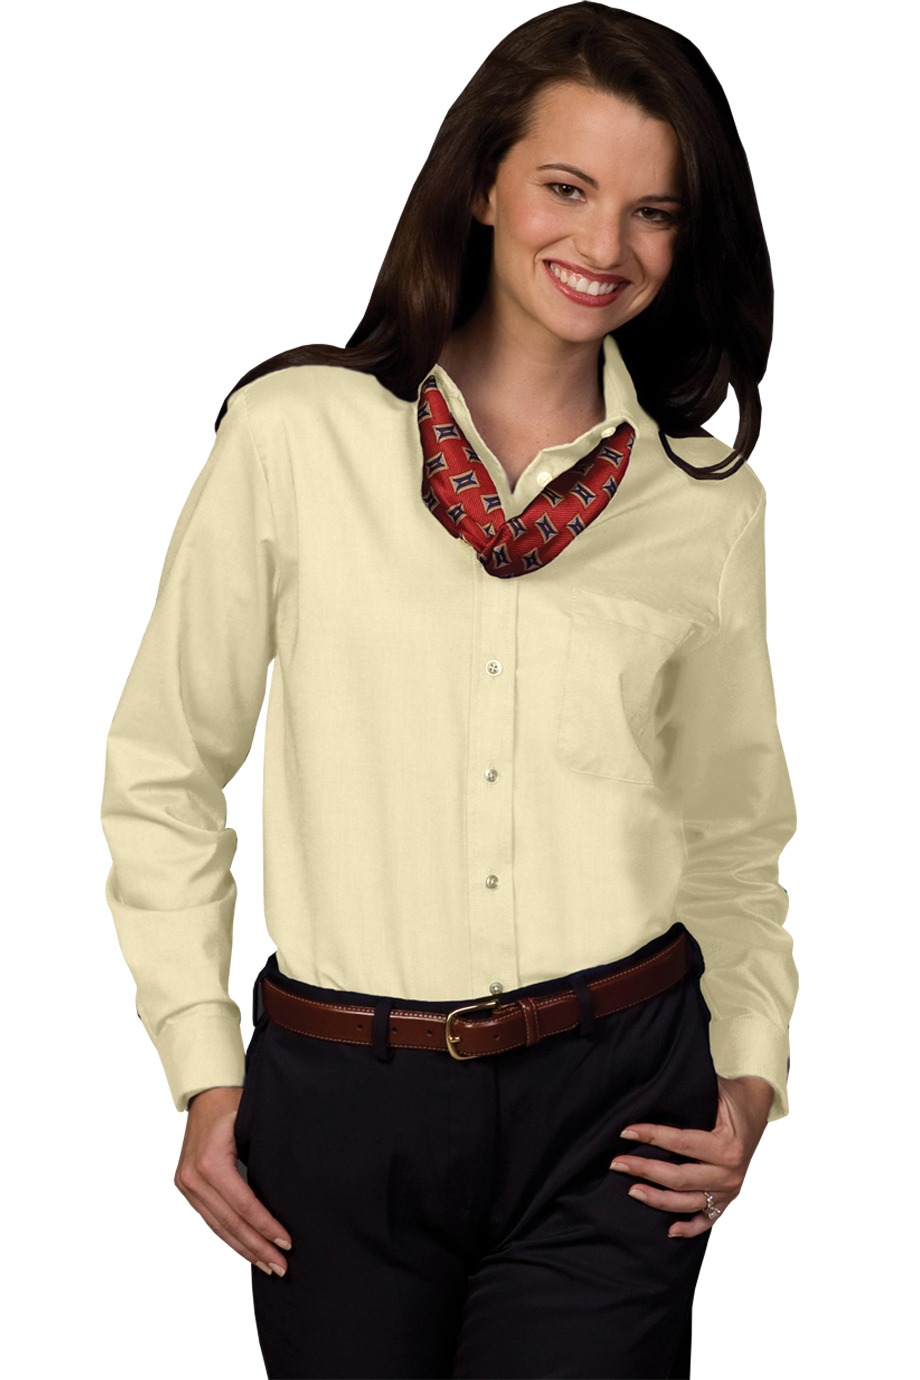 Edward's Women's Oxford Long Sleeve Shirt 